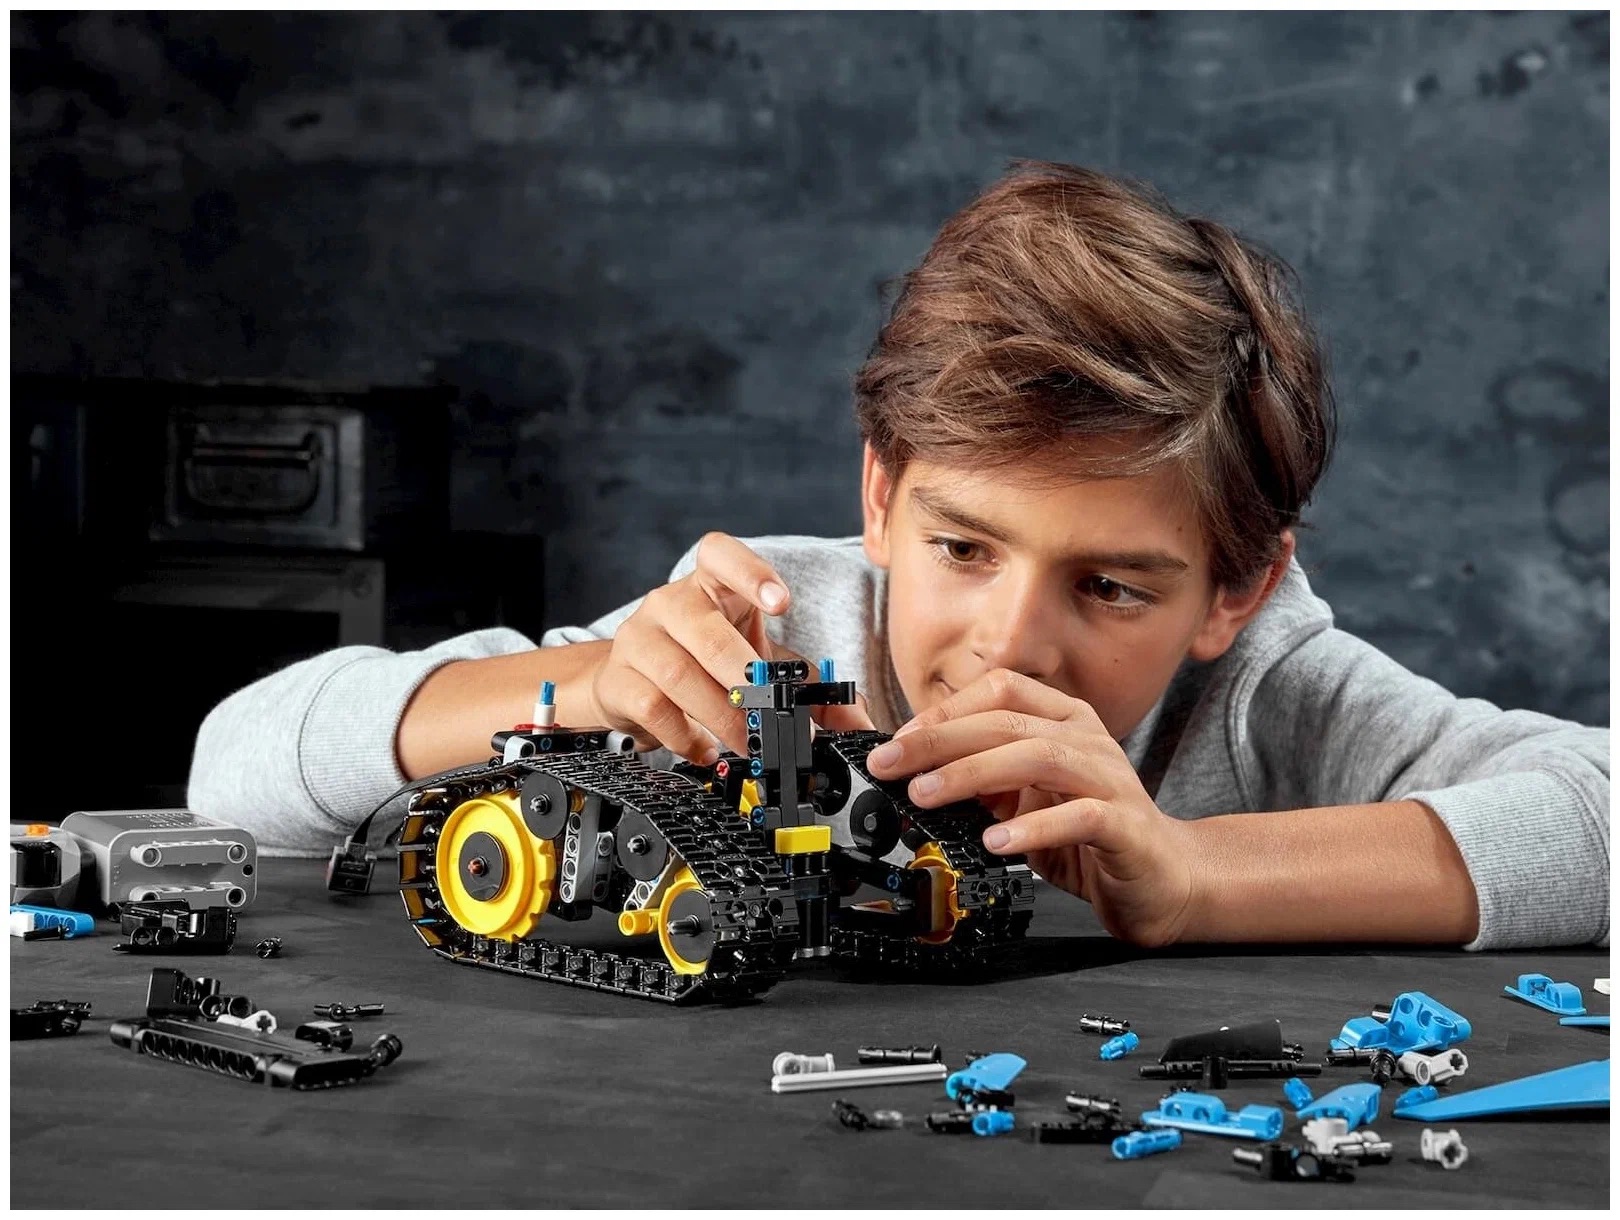 Lego steam конструктор фото 107